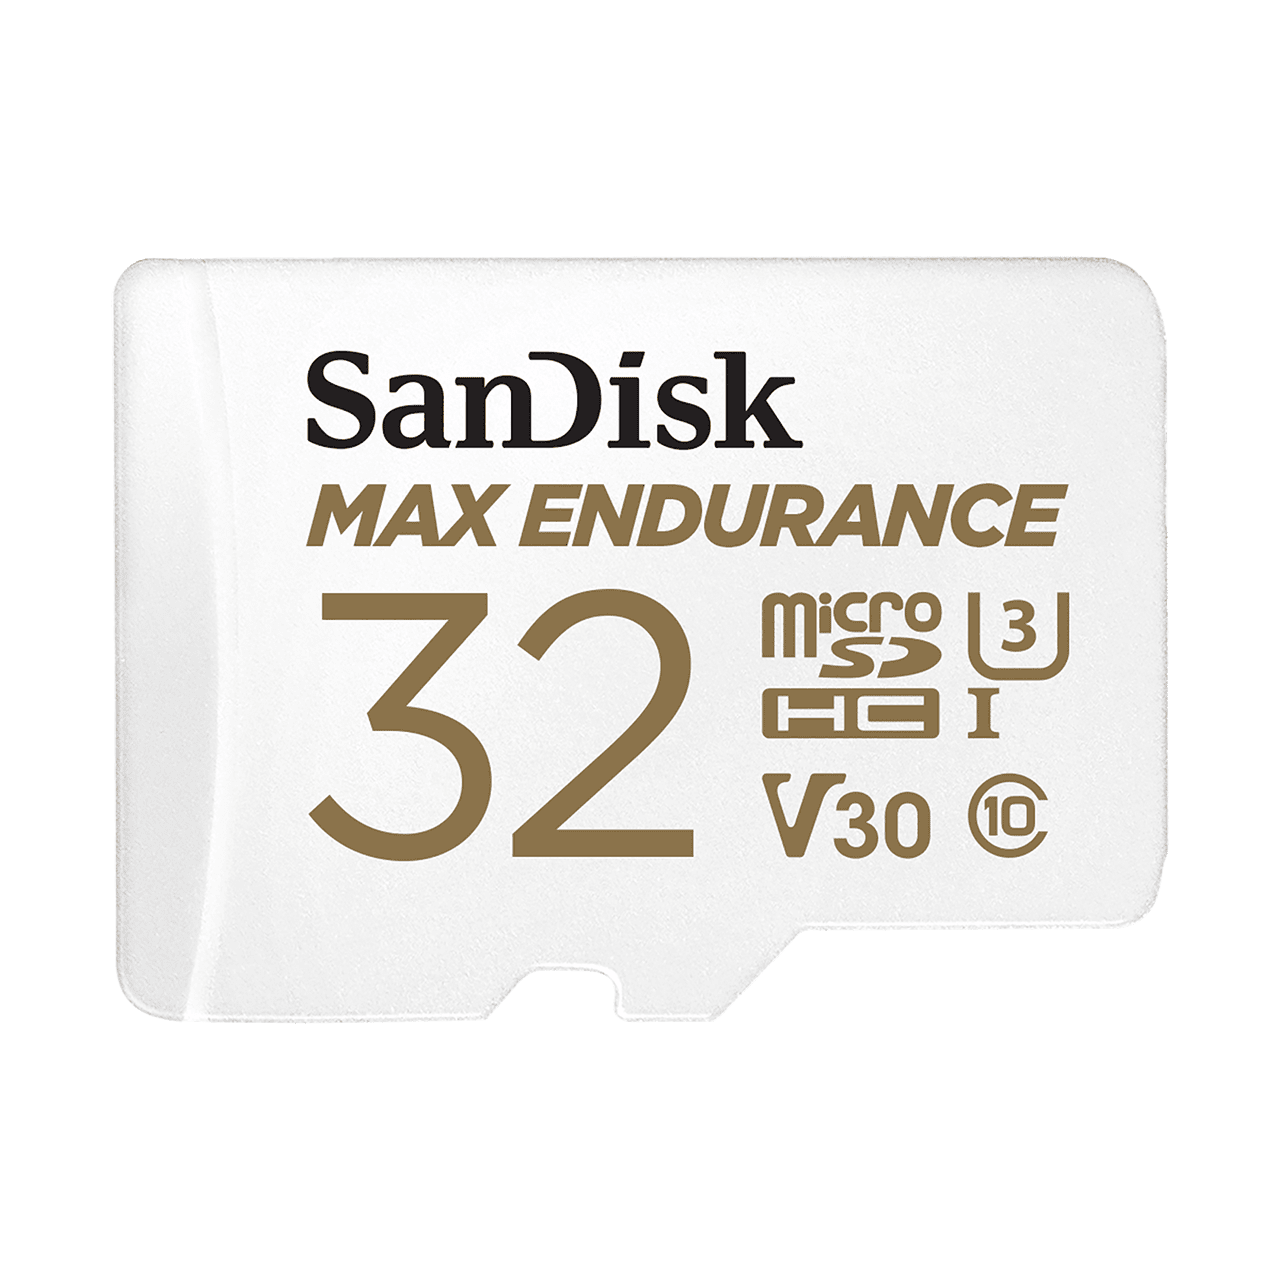 SanDisk MAX Endurance microSD Card - 32GB - Image1